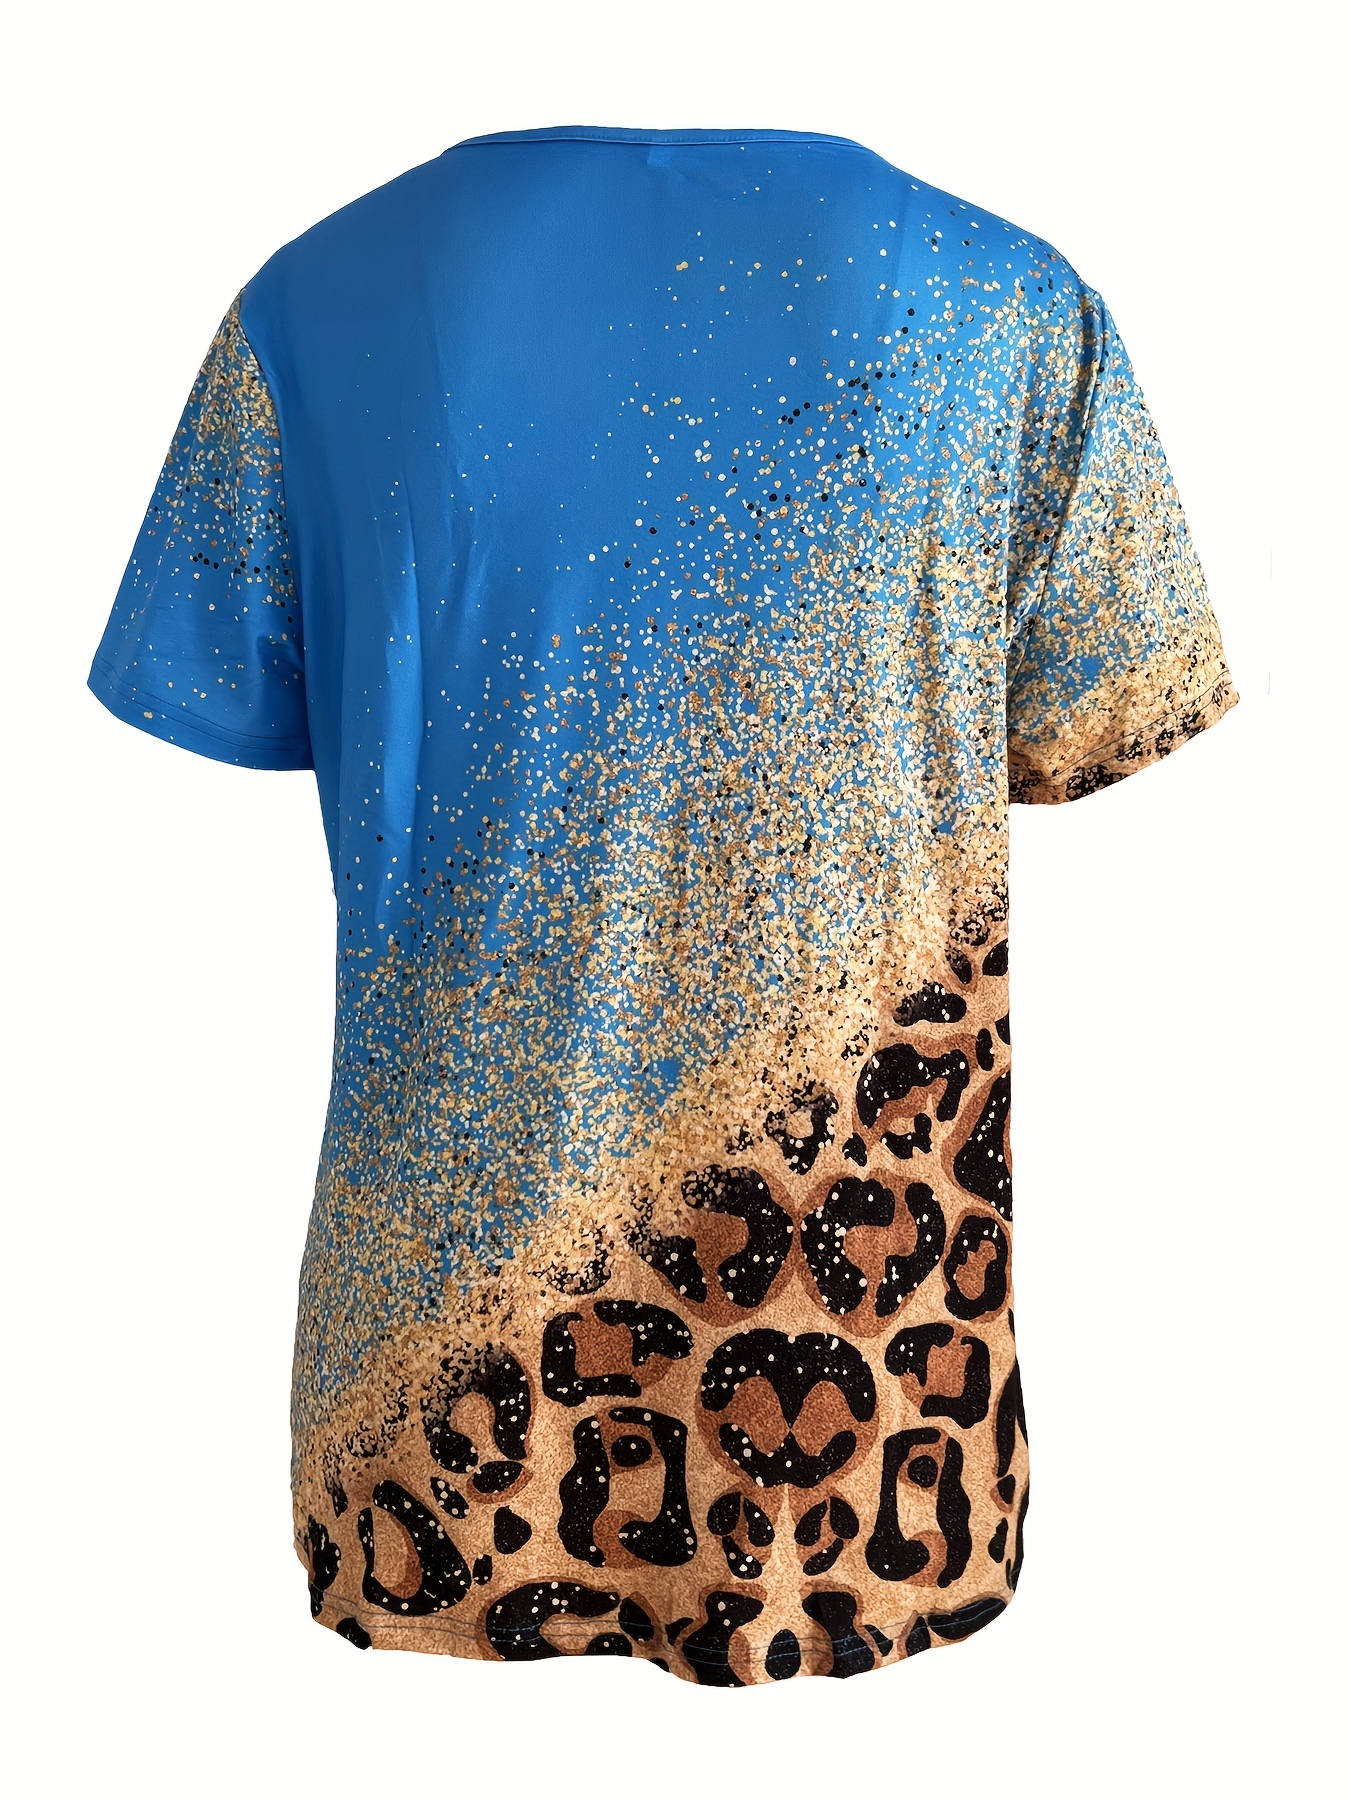 Custom Leopard Glitter Initial Graphic T-Shirt